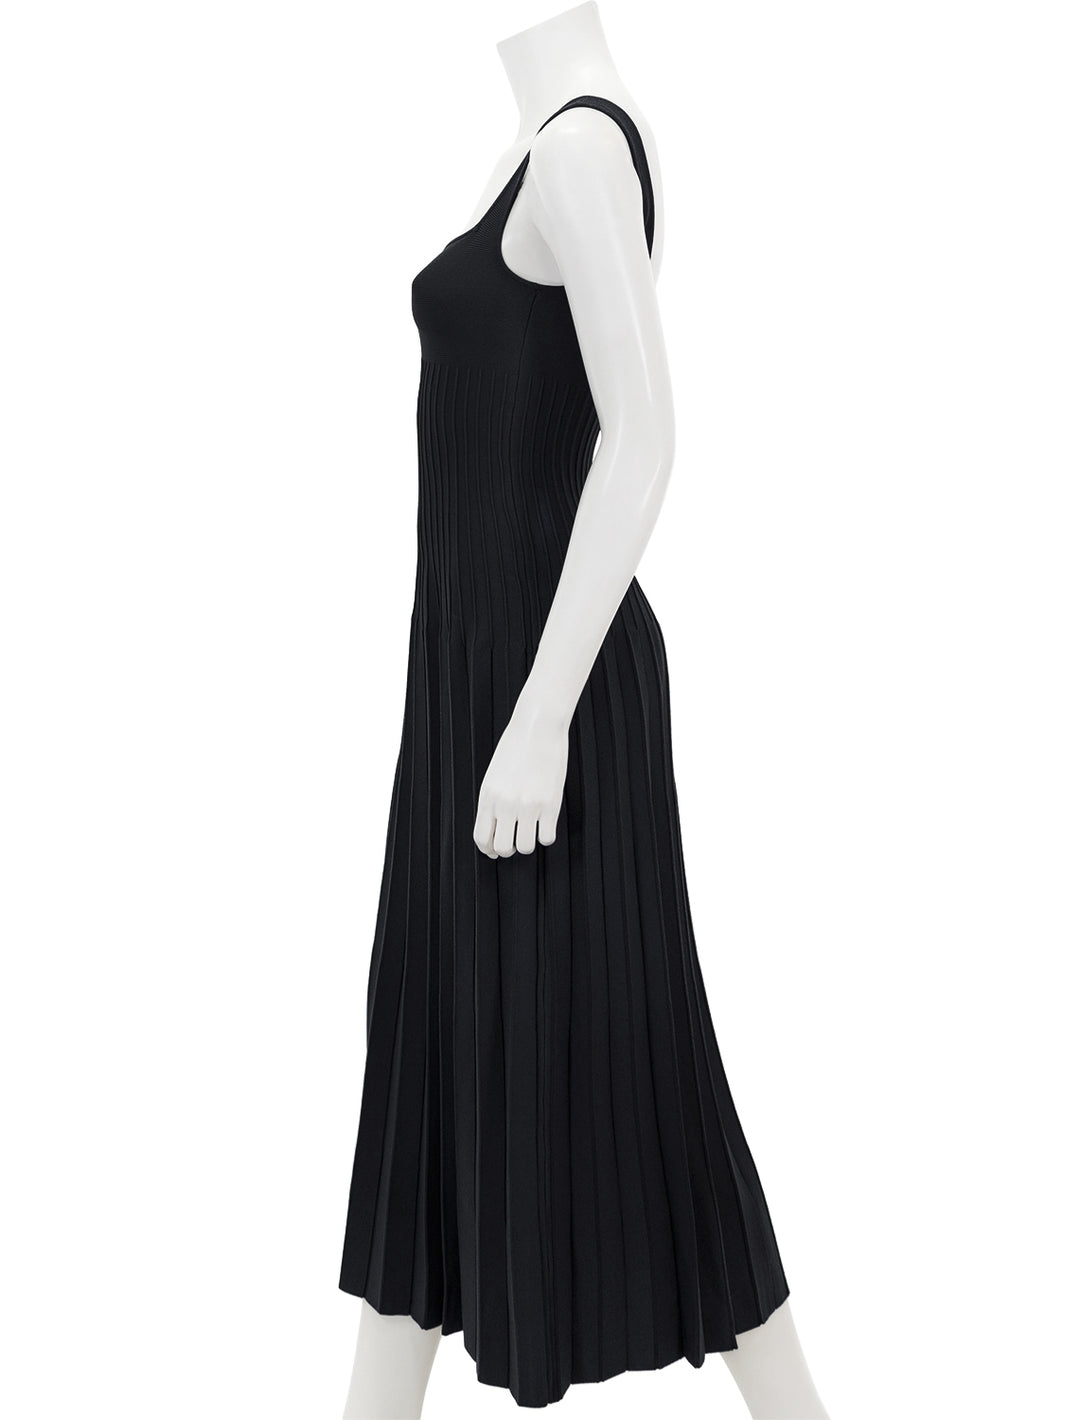 Side view of STAUD's ellison dress in black.